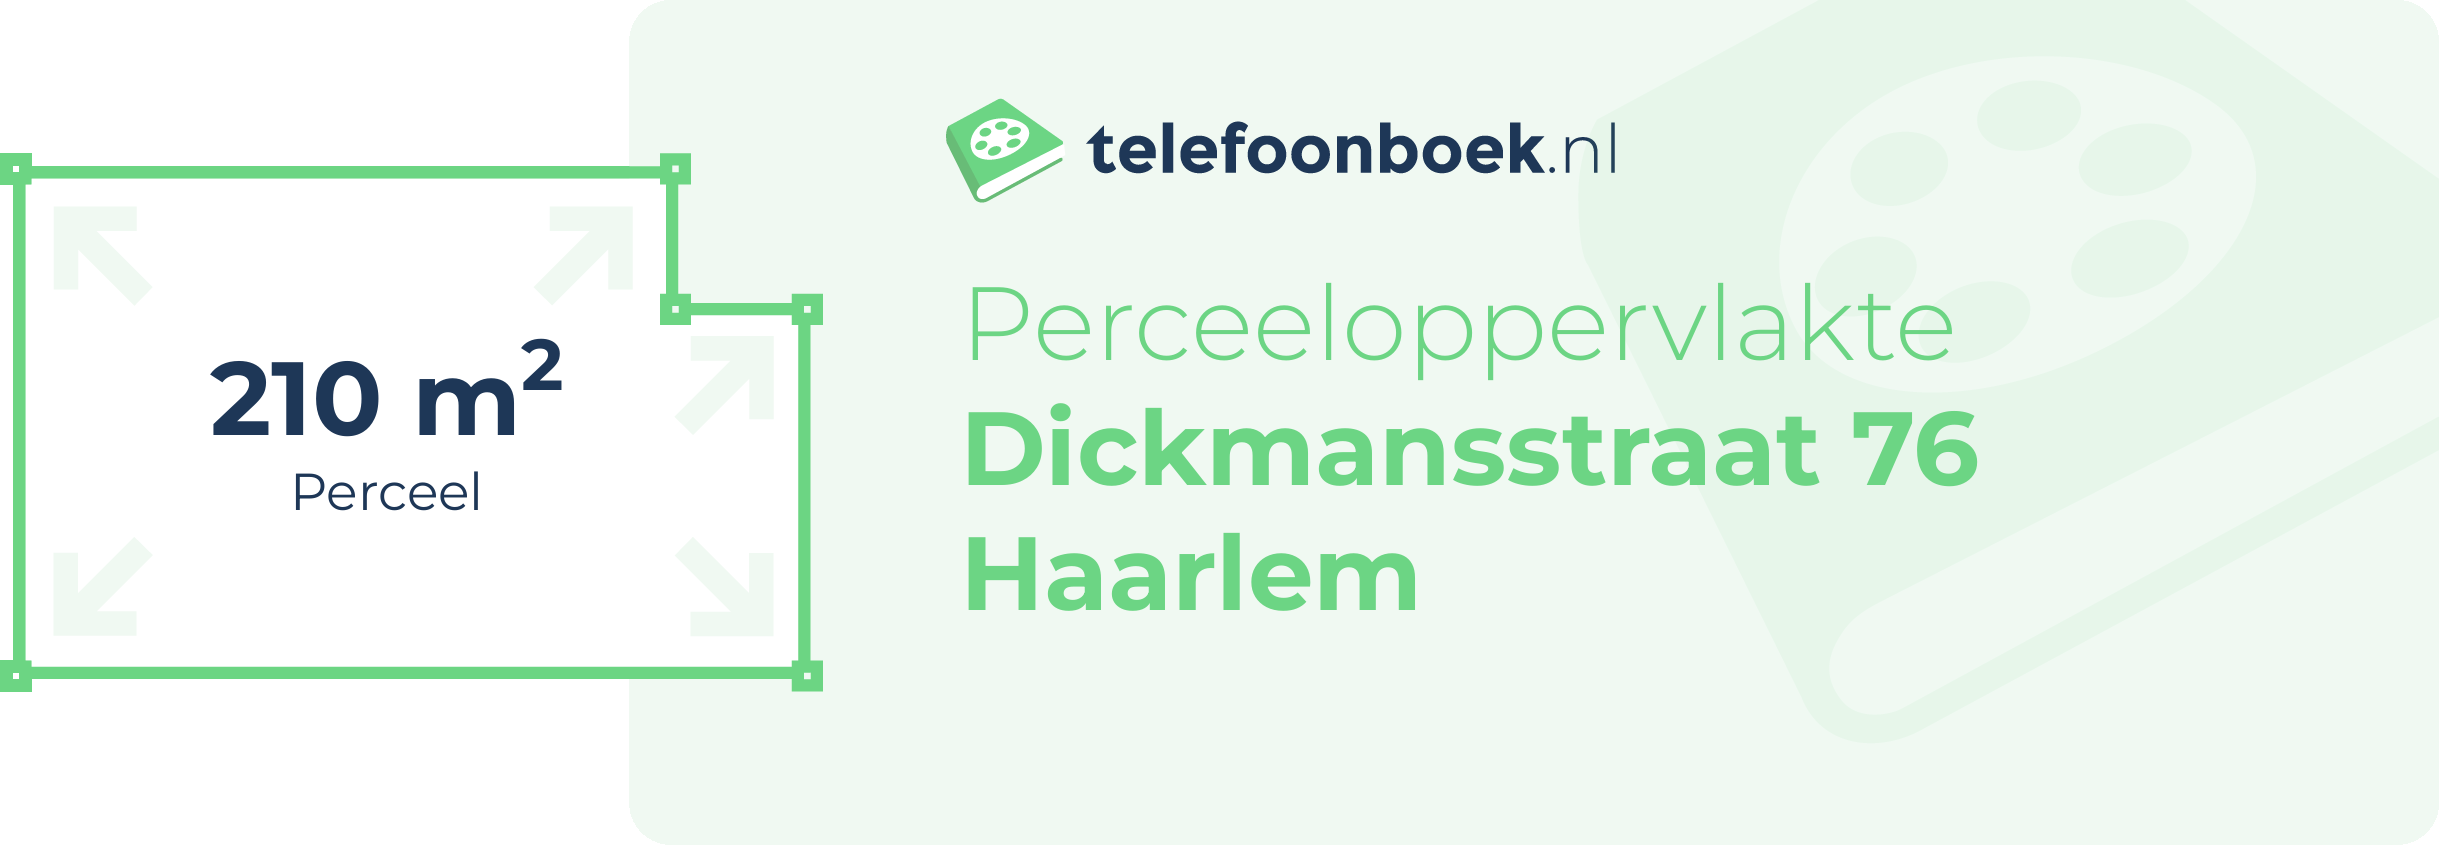 Perceeloppervlakte Dickmansstraat 76 Haarlem